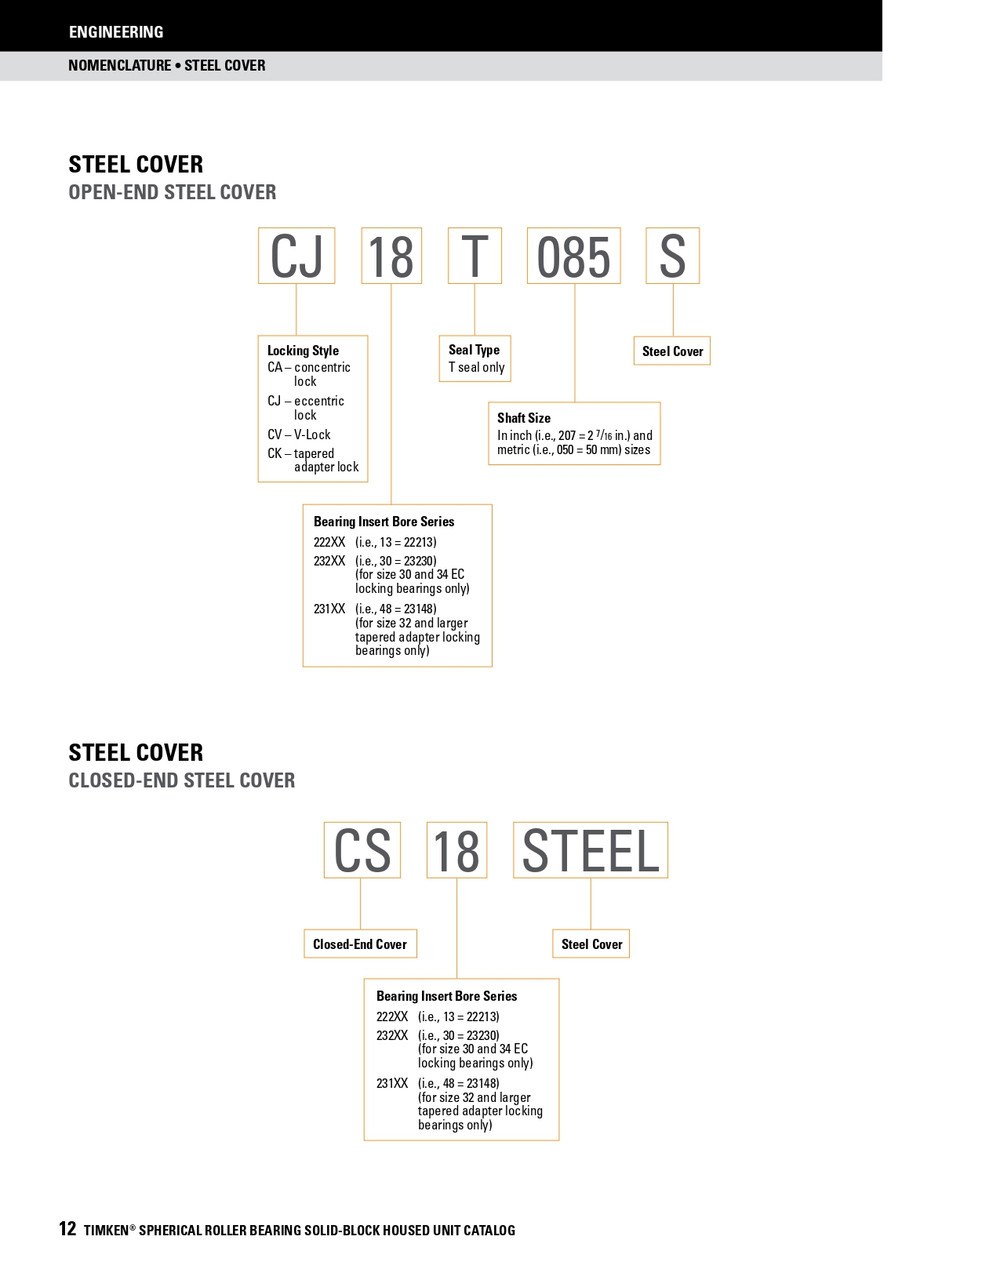 3" Timken SRB Steel Open End Cover w/Teflon Seal - QV V-Lock® Type   CV16T300S